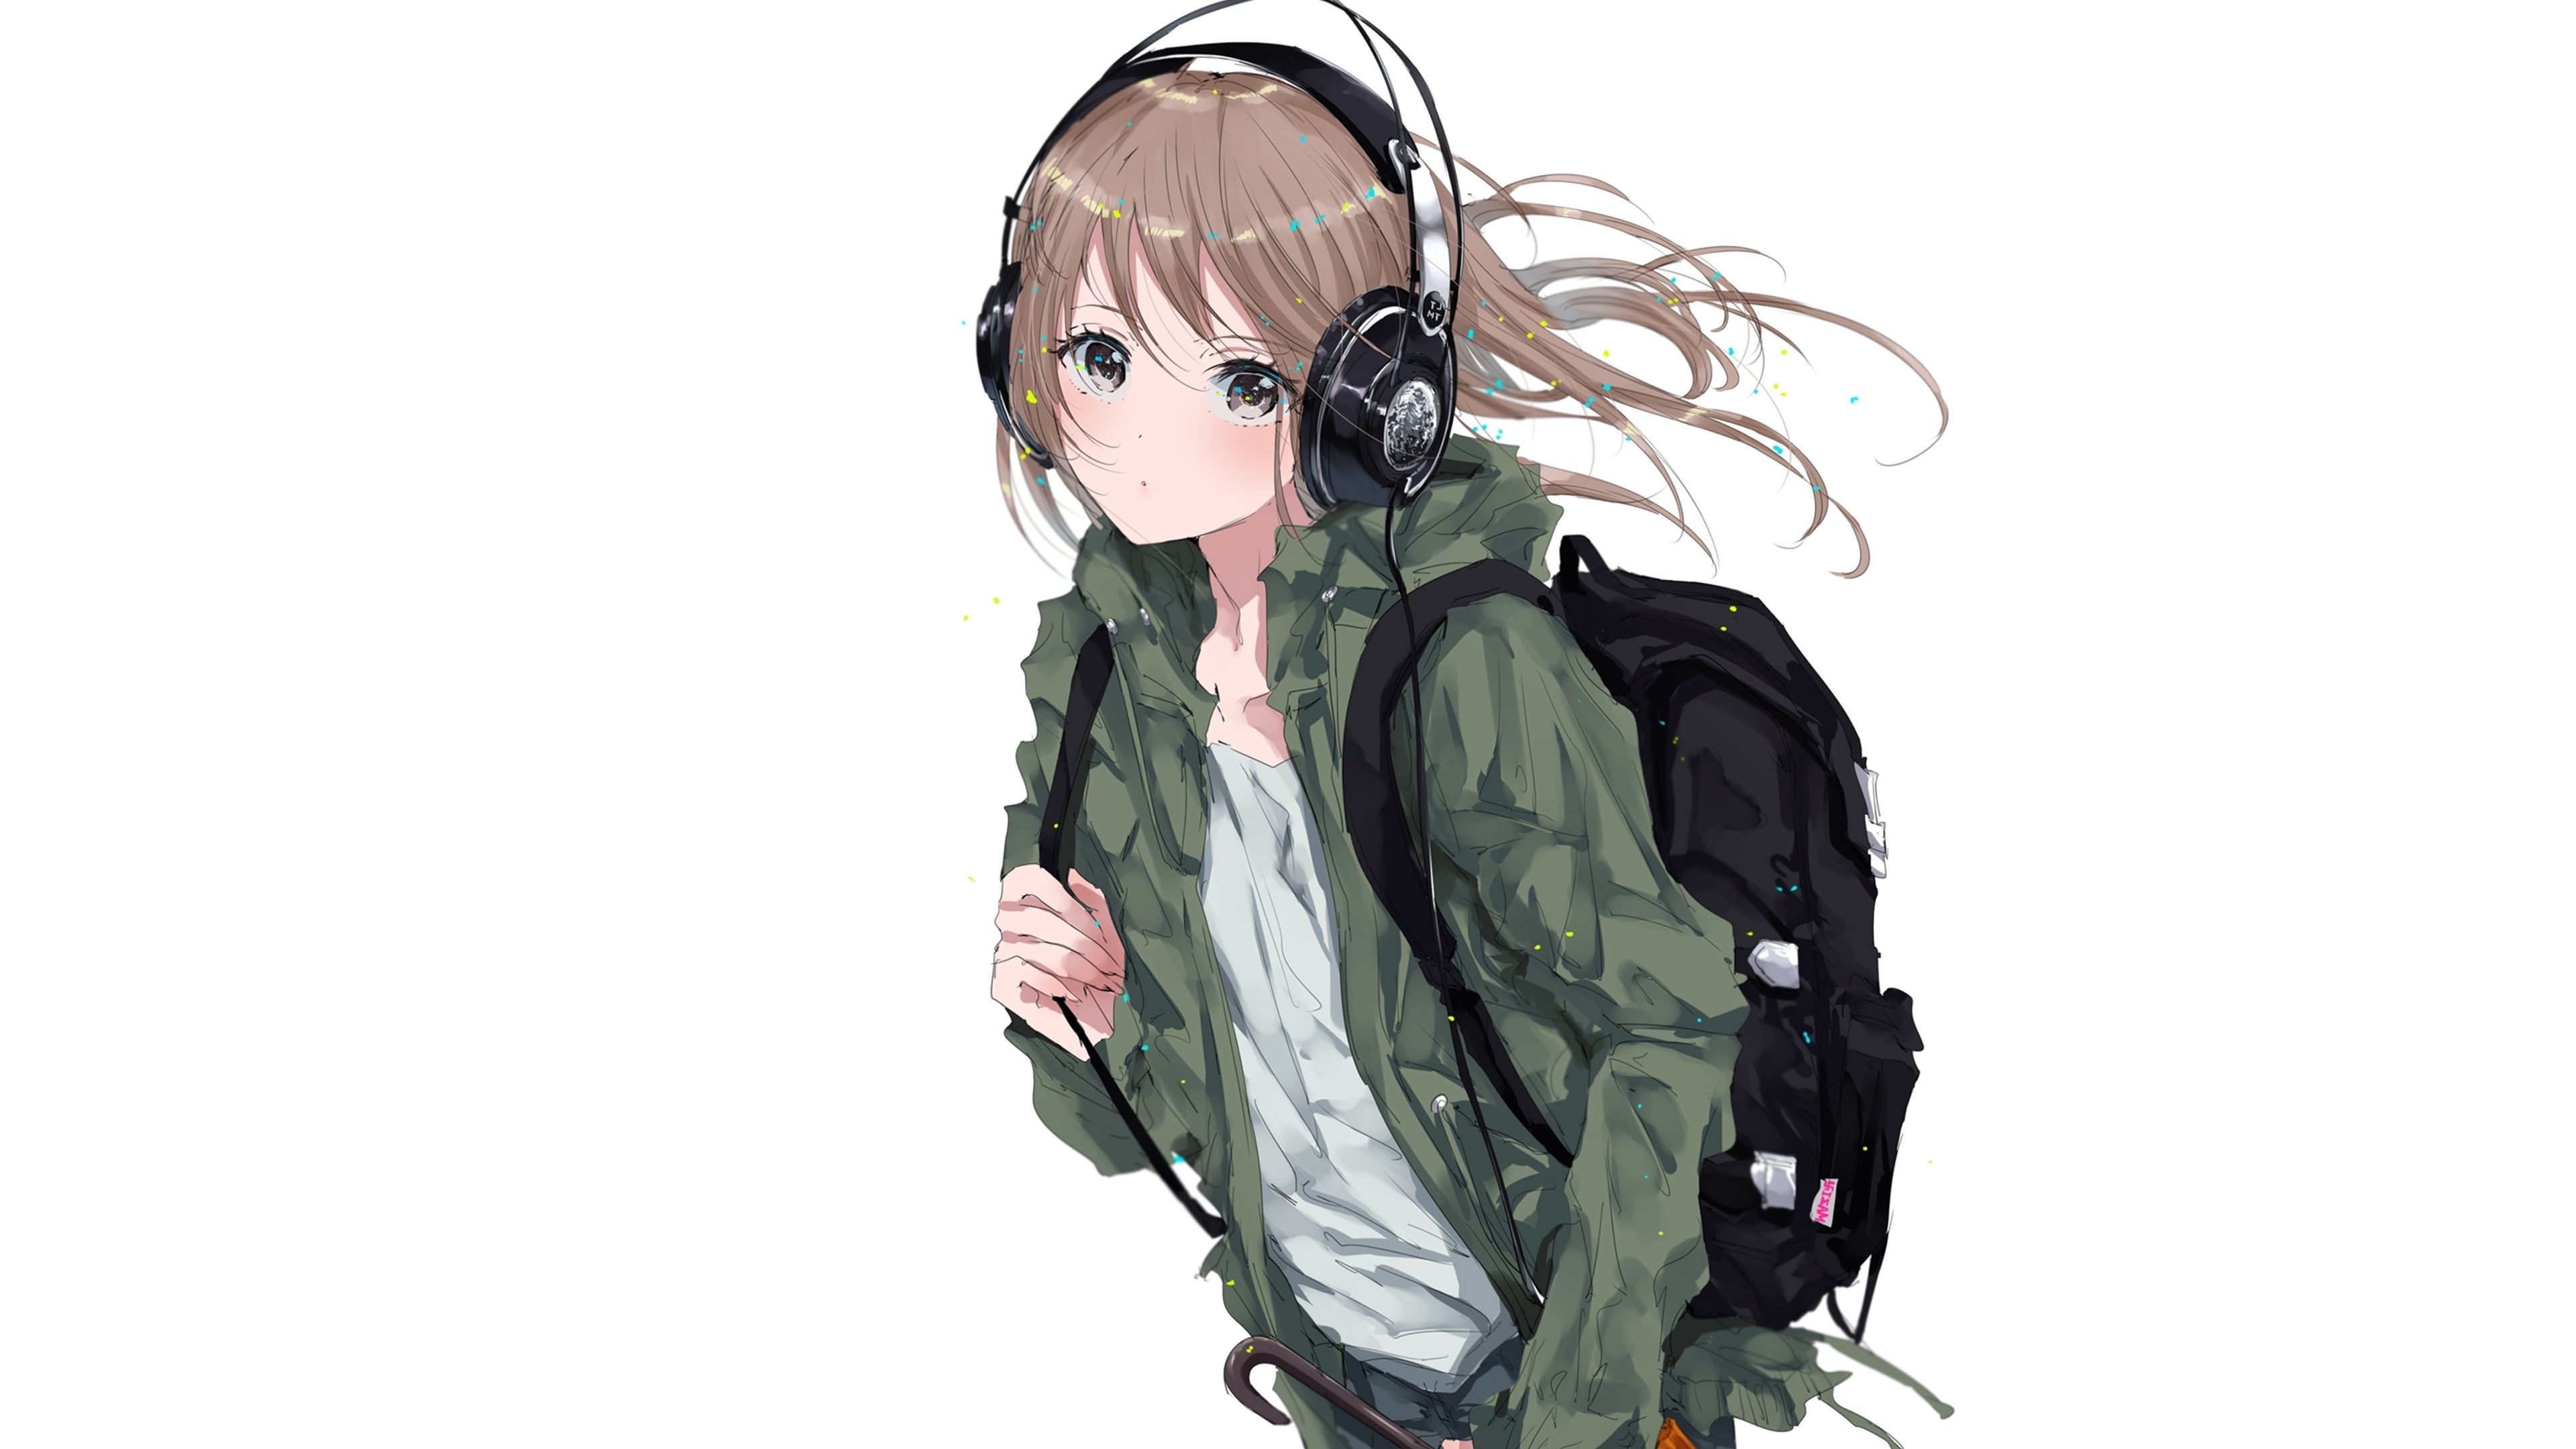 Download 3840x2160 wallpaper original, anime girl, bag, headphone, walk, 4k, uhd 16: widescreen, 3840x2160 HD image, background, 8442